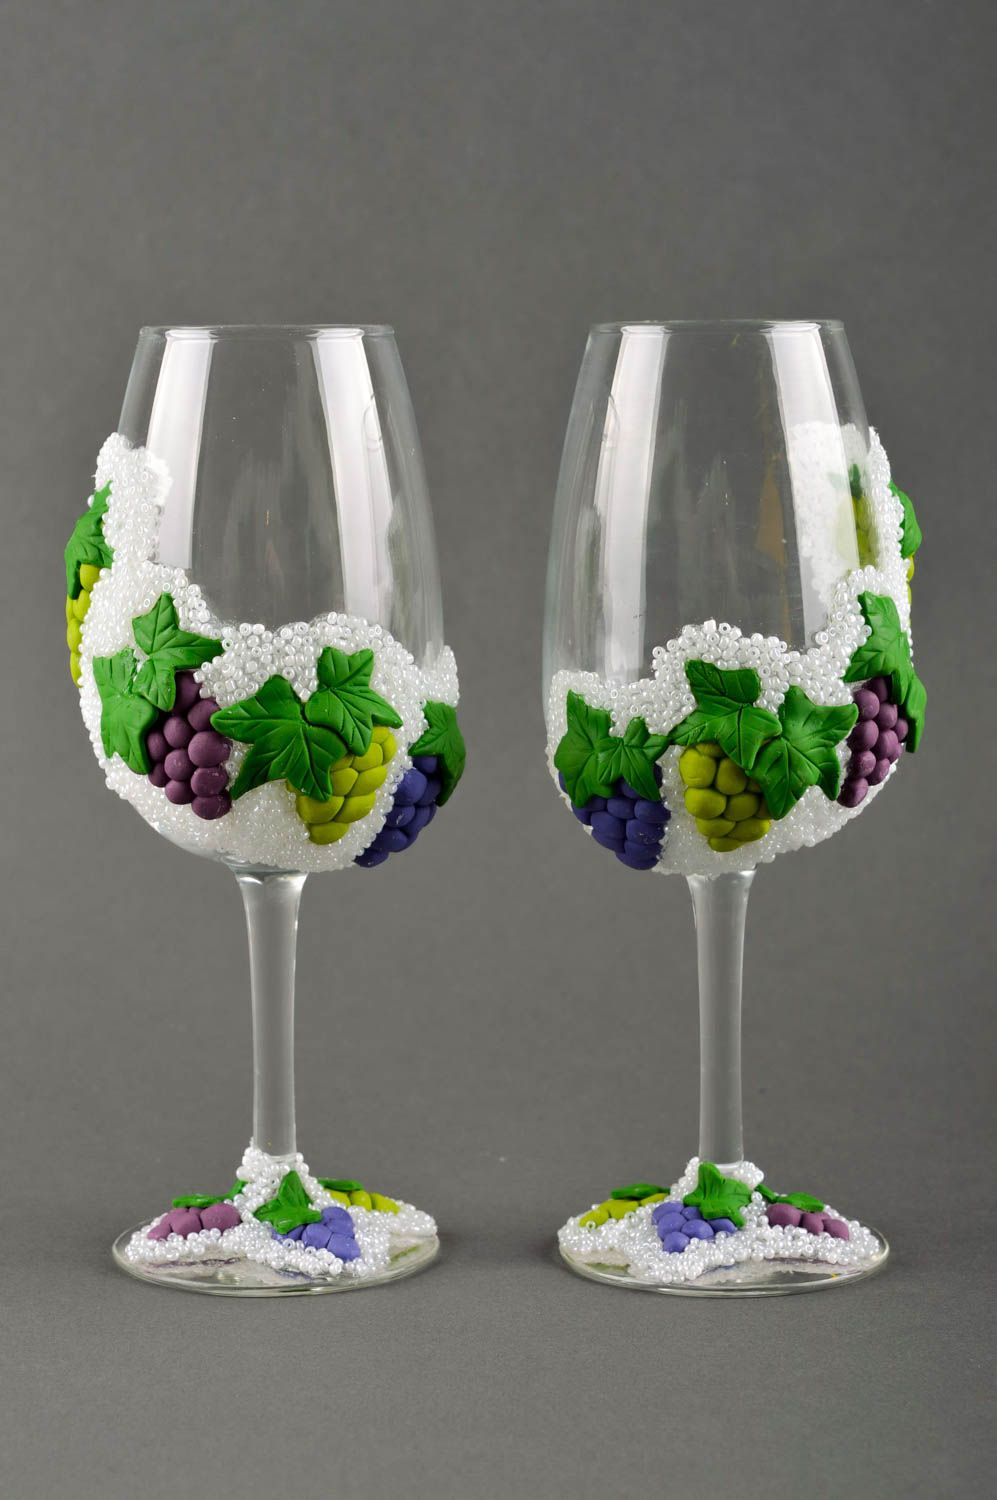 Unusual handmade wine glass design decorative glass ware gift ideas 2 pieces photo 1